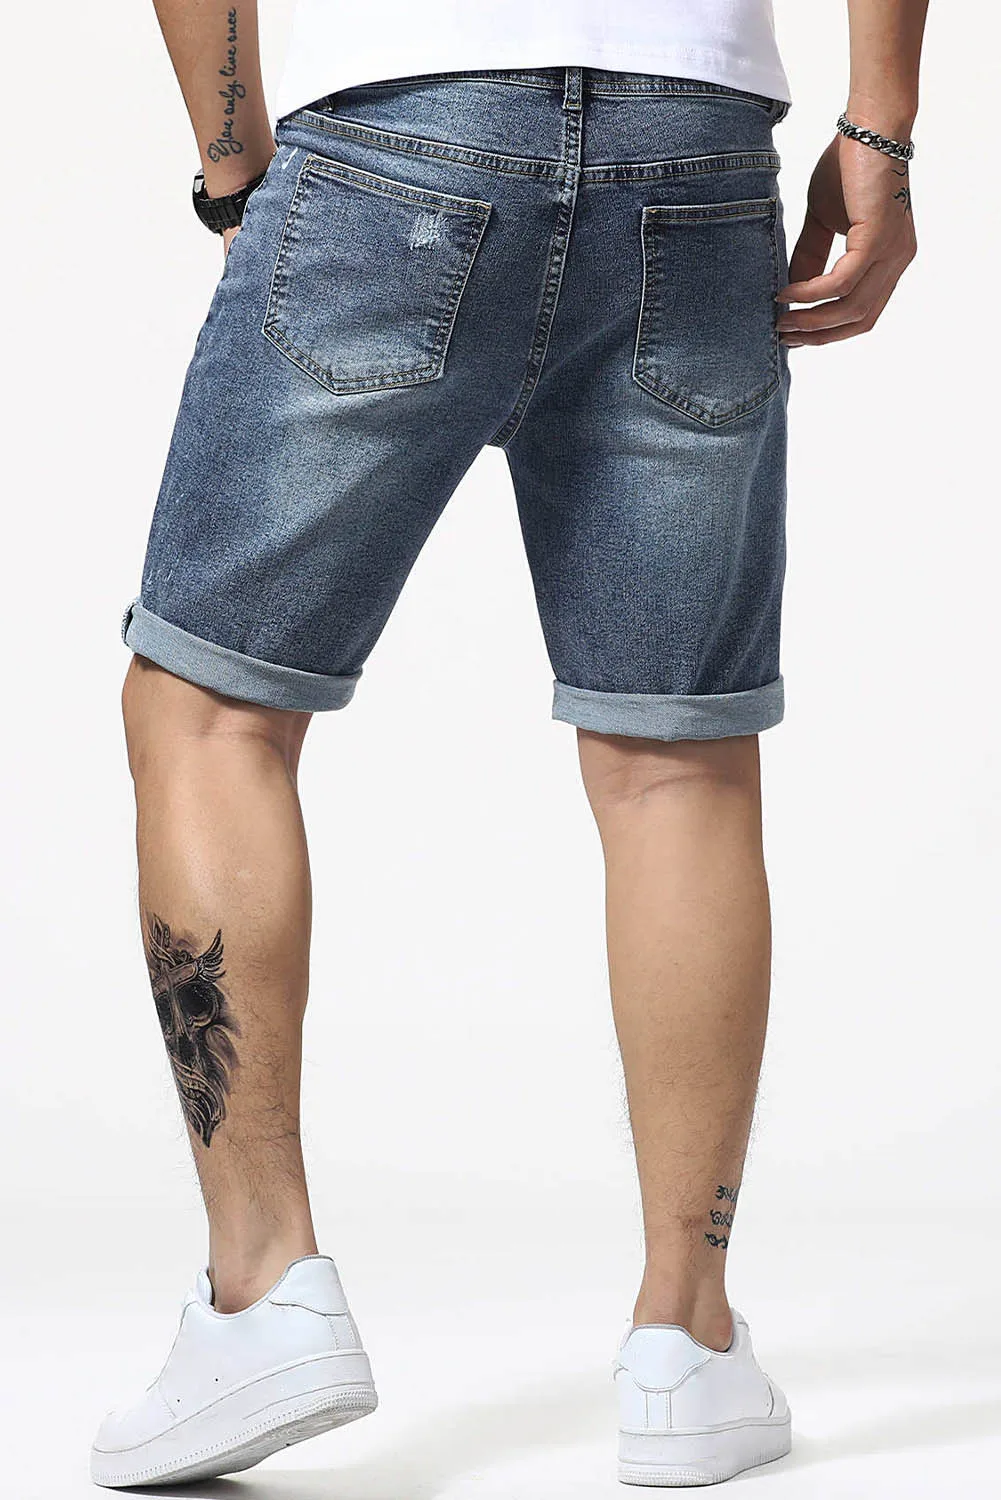 Dear-Lover Cotton Casual Street Slim-Fit Distressed Denim Men's Jean Shorts